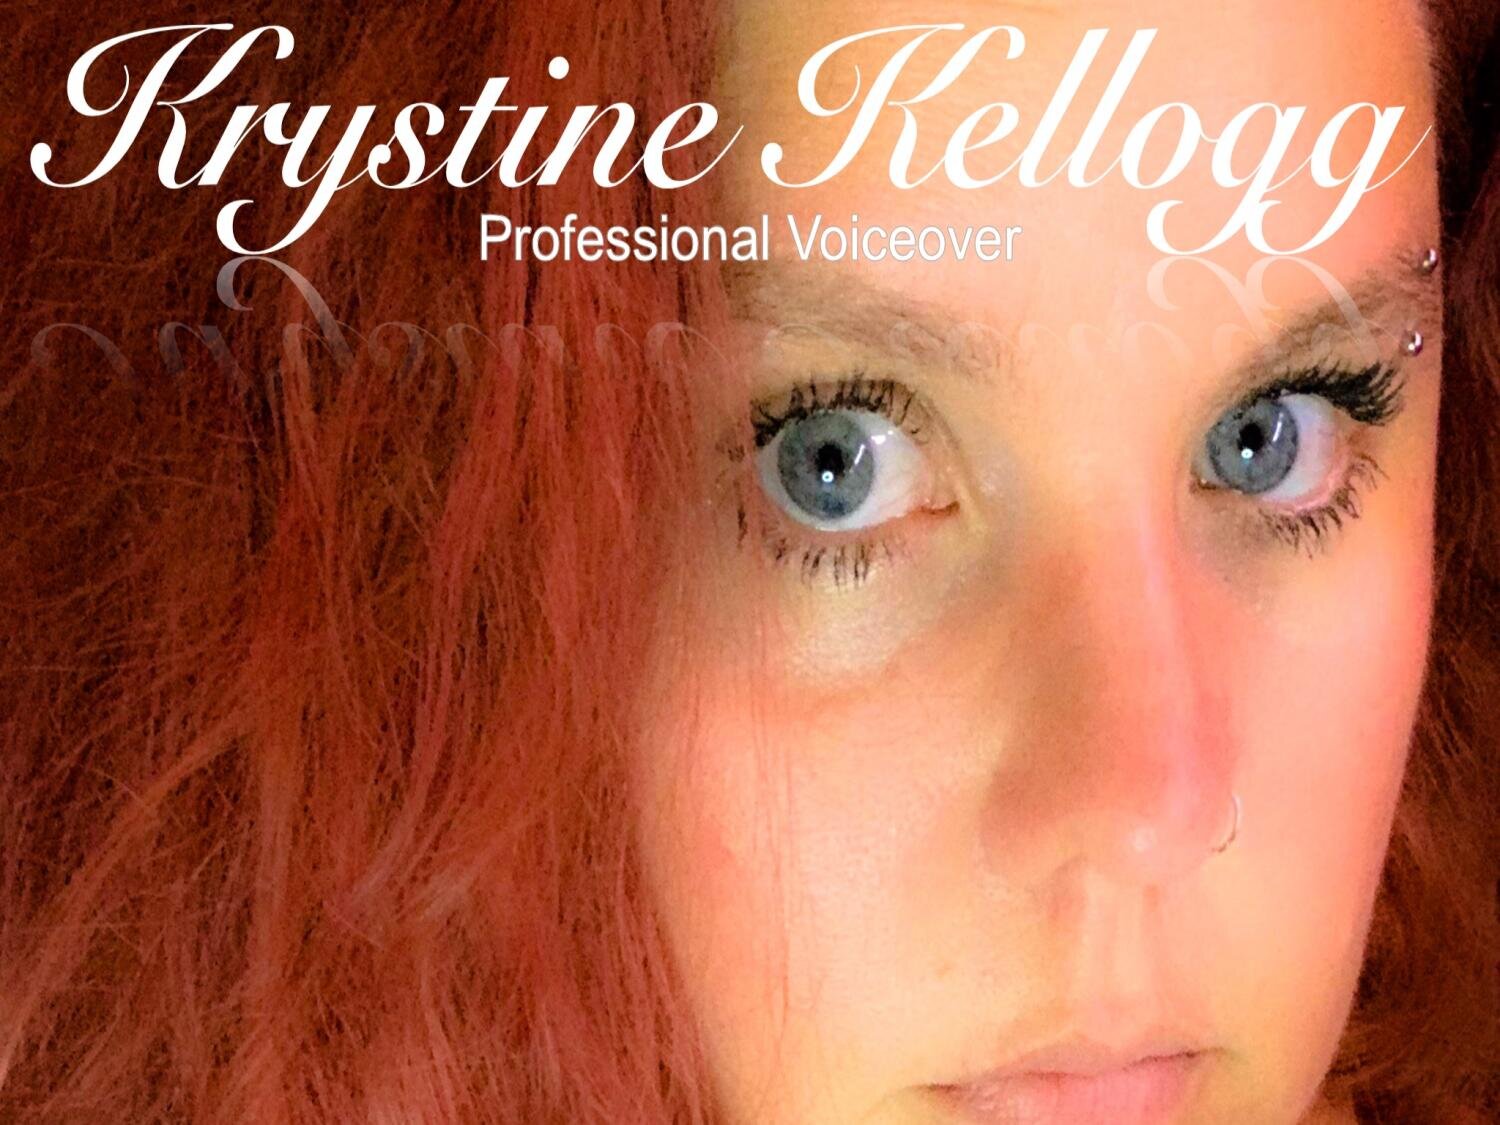 Krystine Kellogg Cover Image